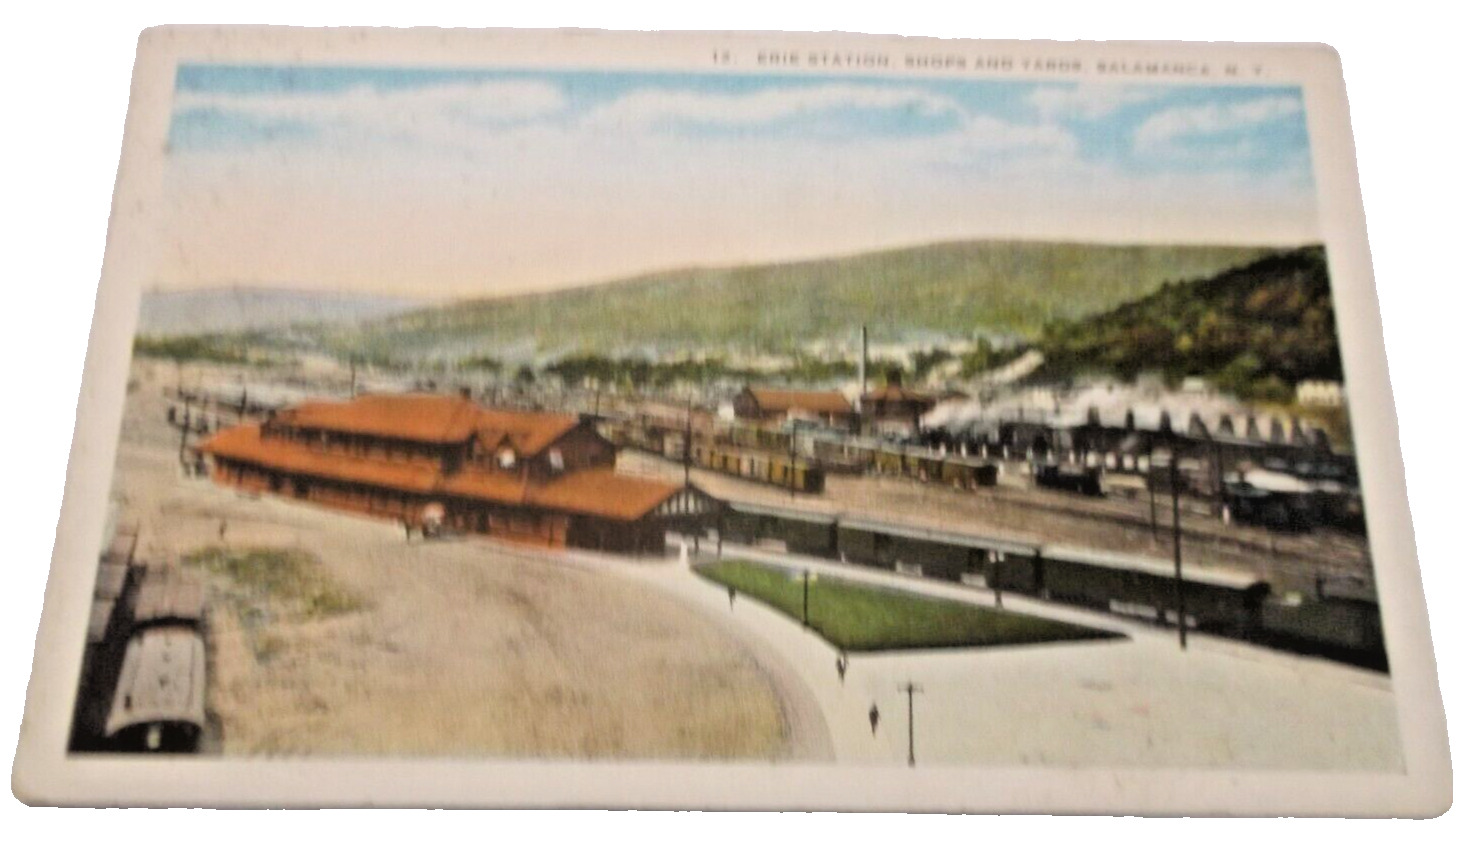 1923 ERIE RAILROAD SALAMANCA NEW YORK PASSENGER STATION USED POST CARD